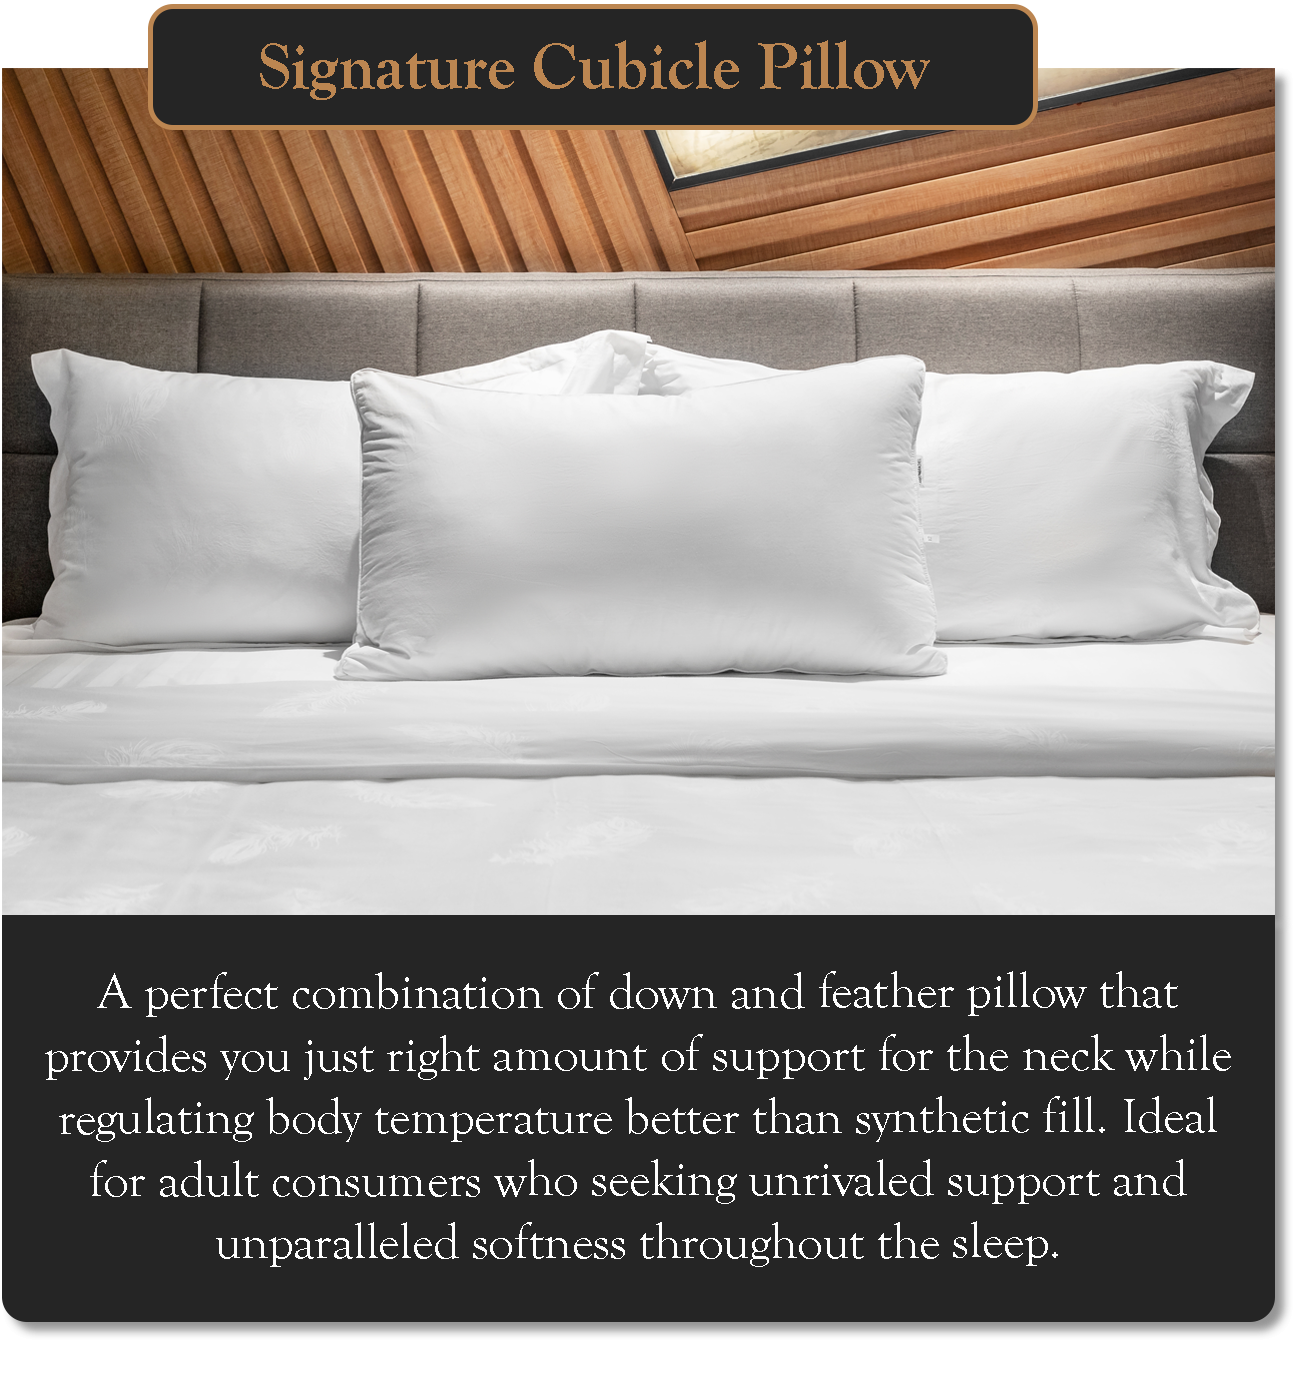 Signature Cubicle Pillow